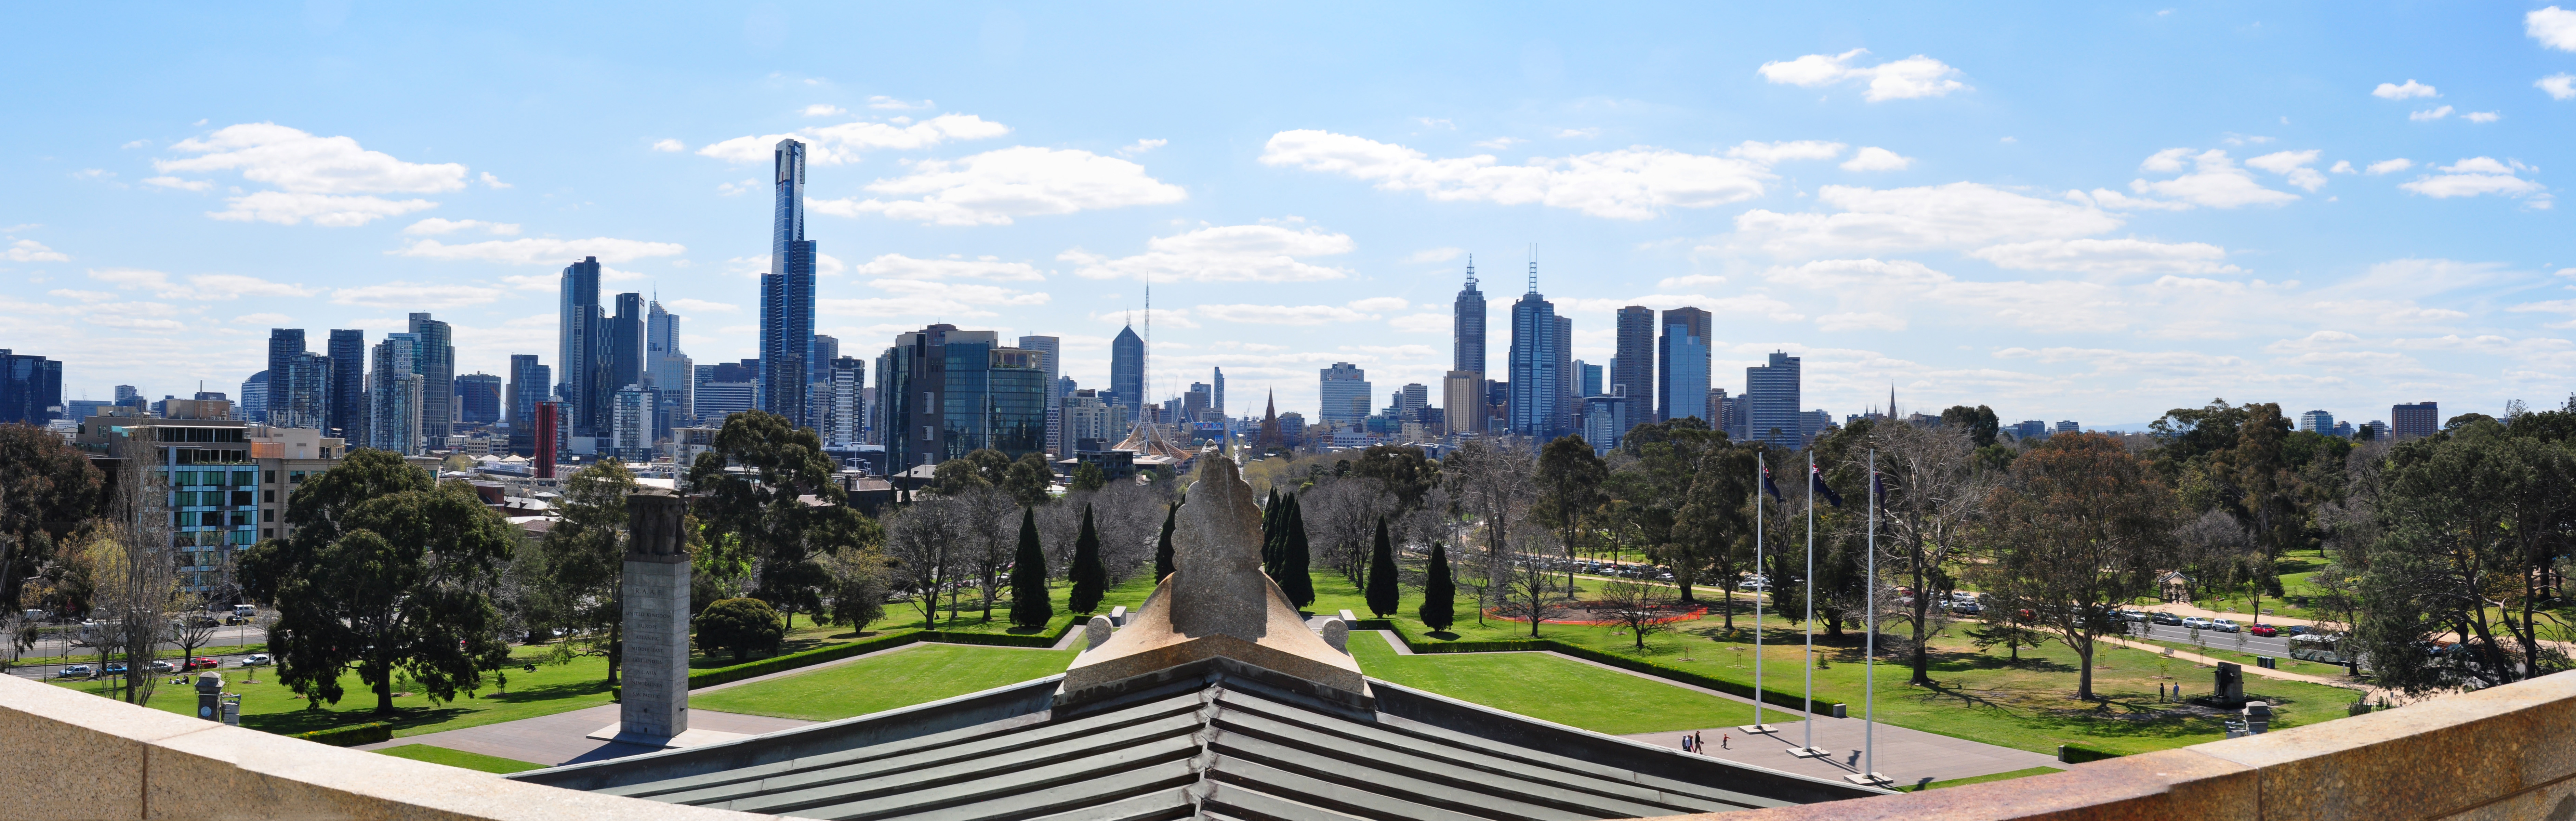 Melbourne panorama photo